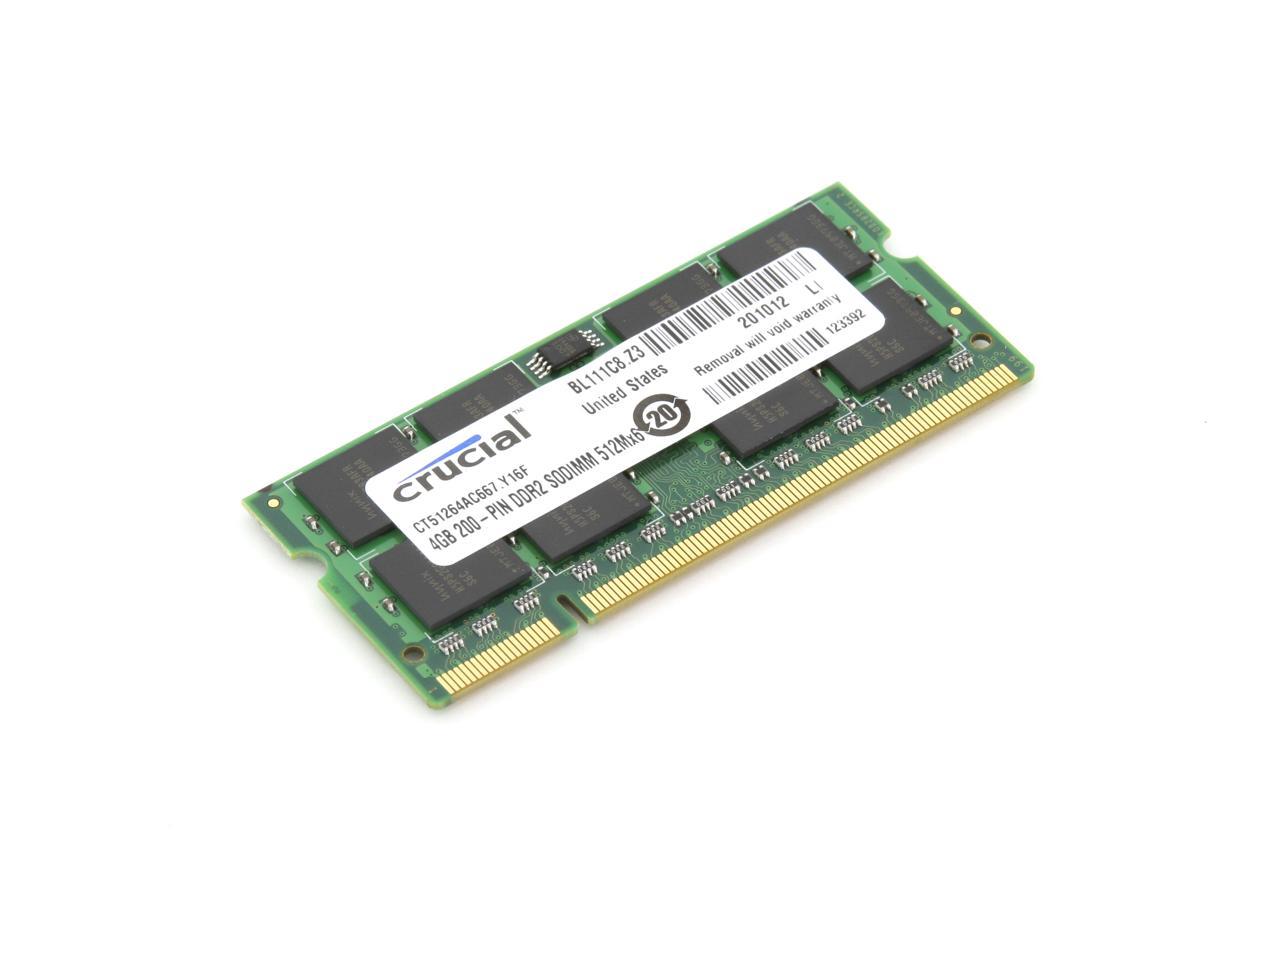 Crucial 8GB (2 x 4GB) 200-Pin DDR2 SO-DIMM DDR2 667 (PC2 5300) Laptop